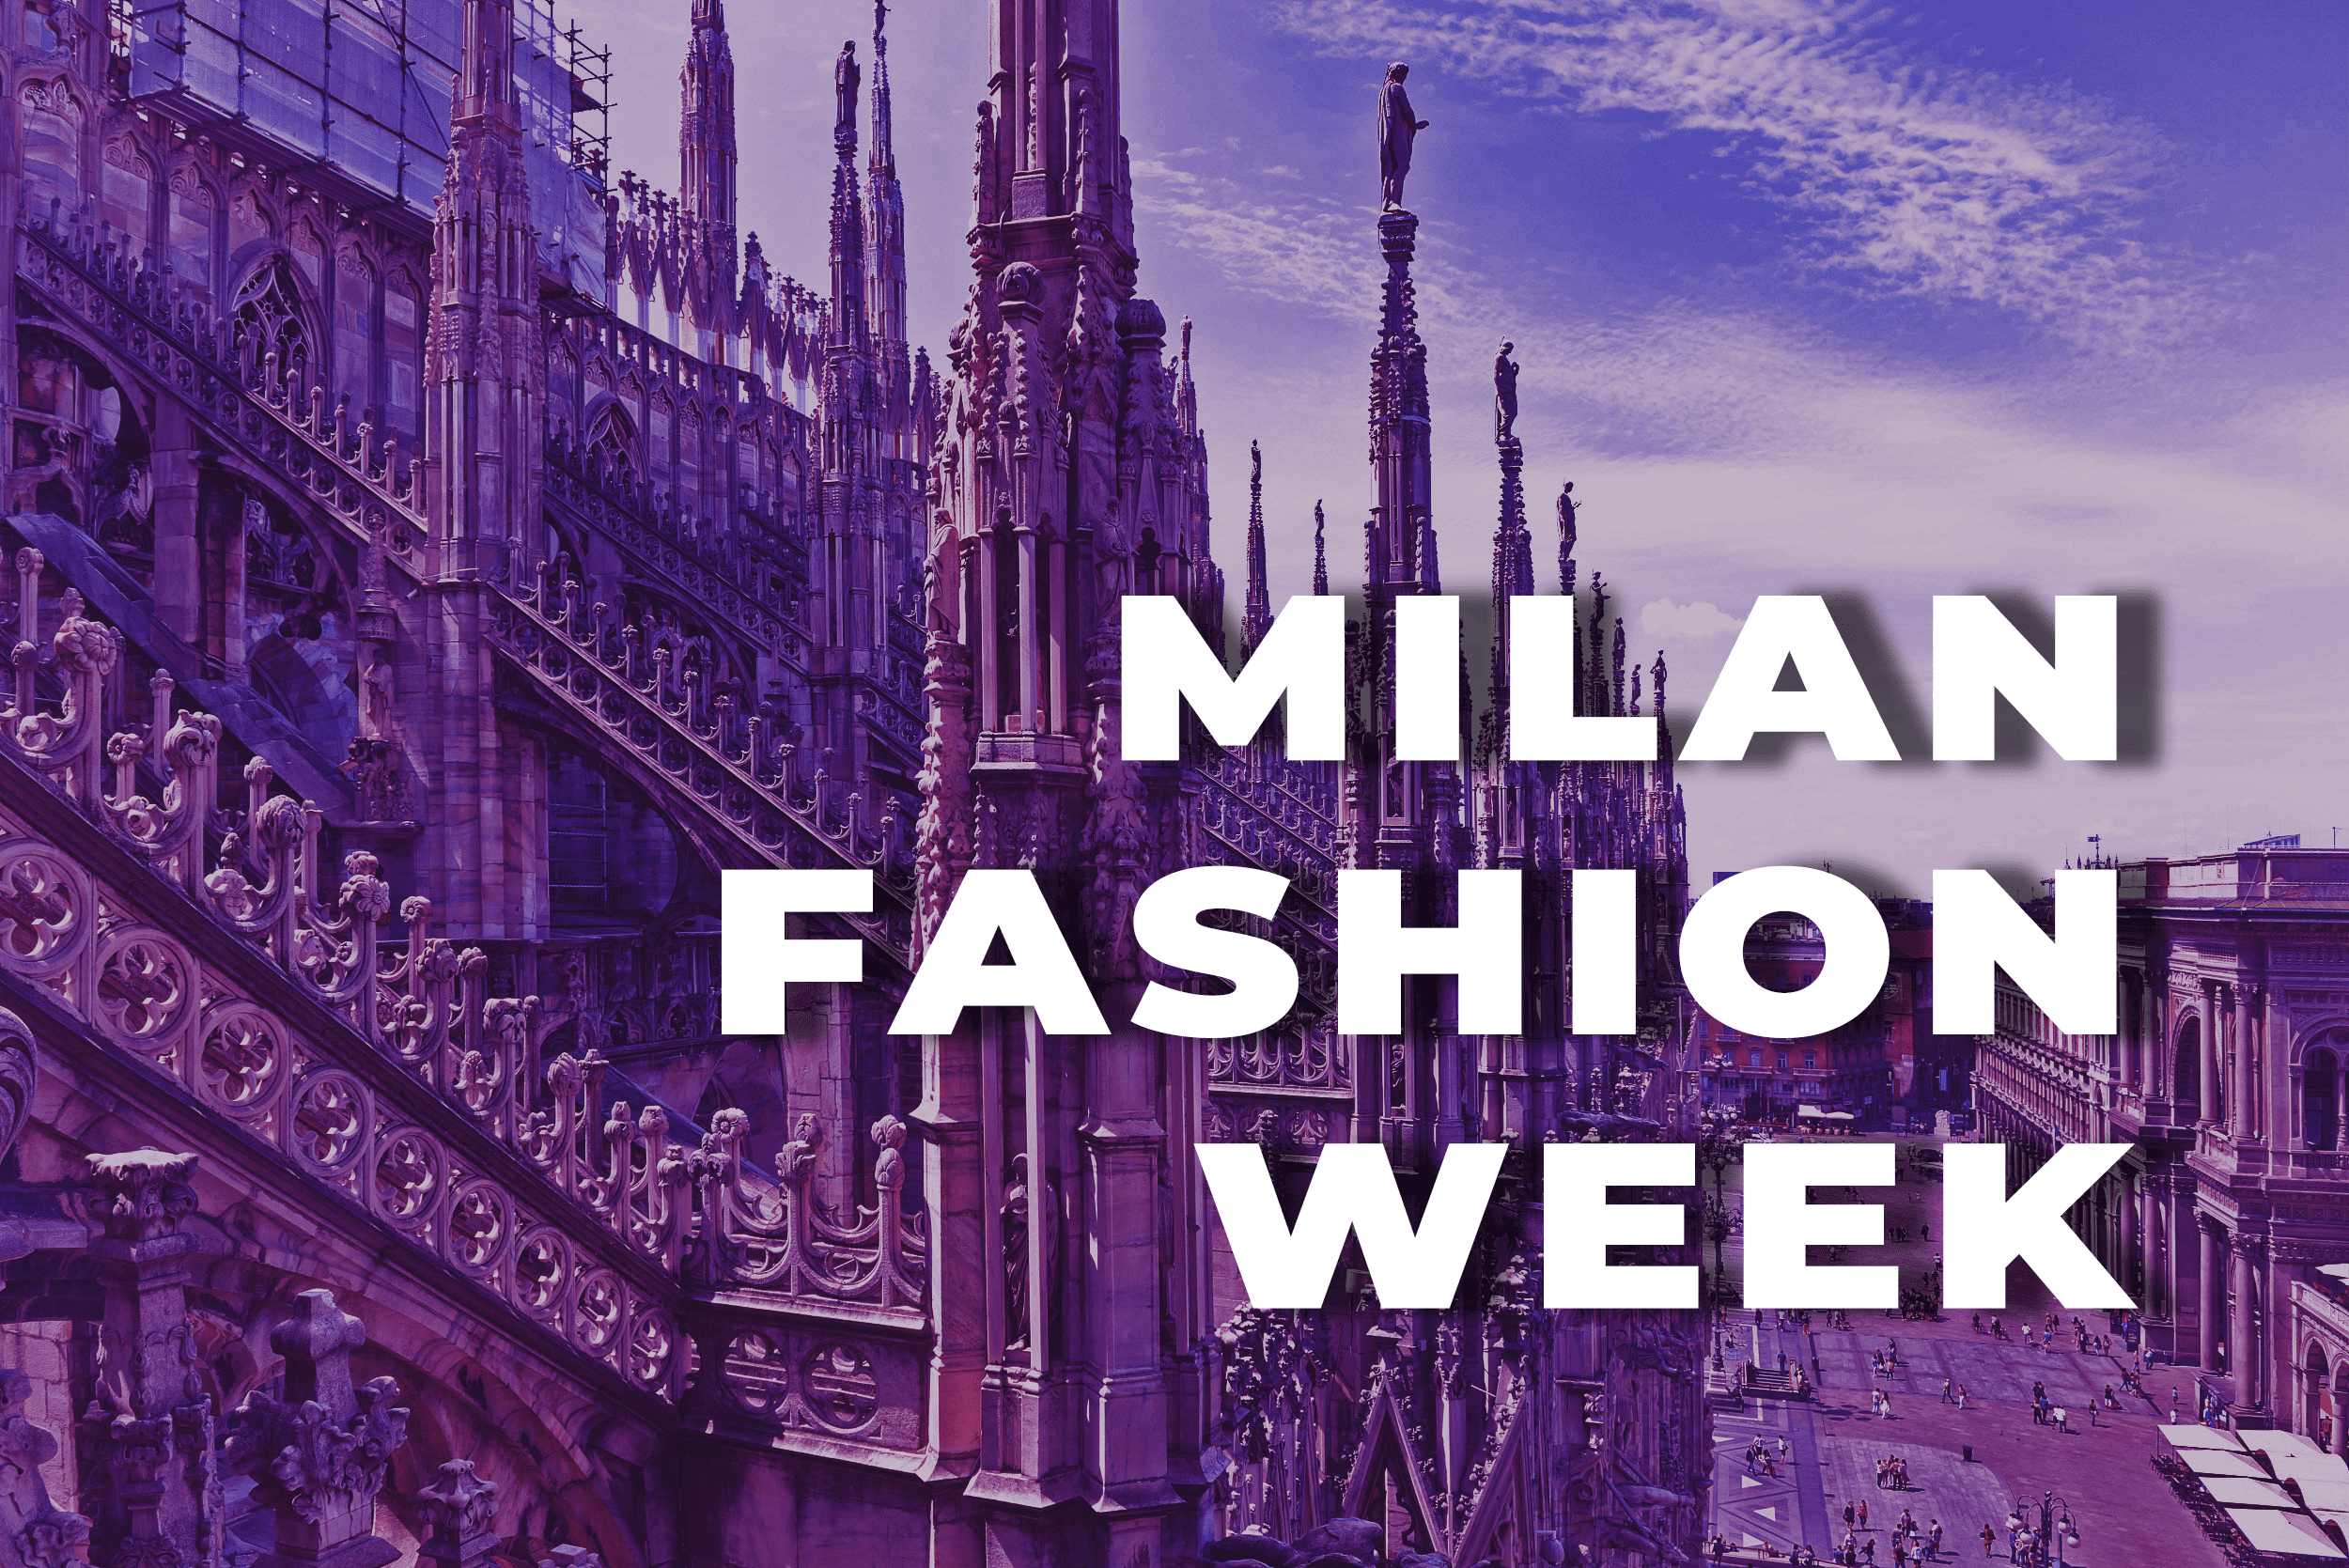 Milan Fashion Week 2022 – 2023. Dates and Schedule. Everything You